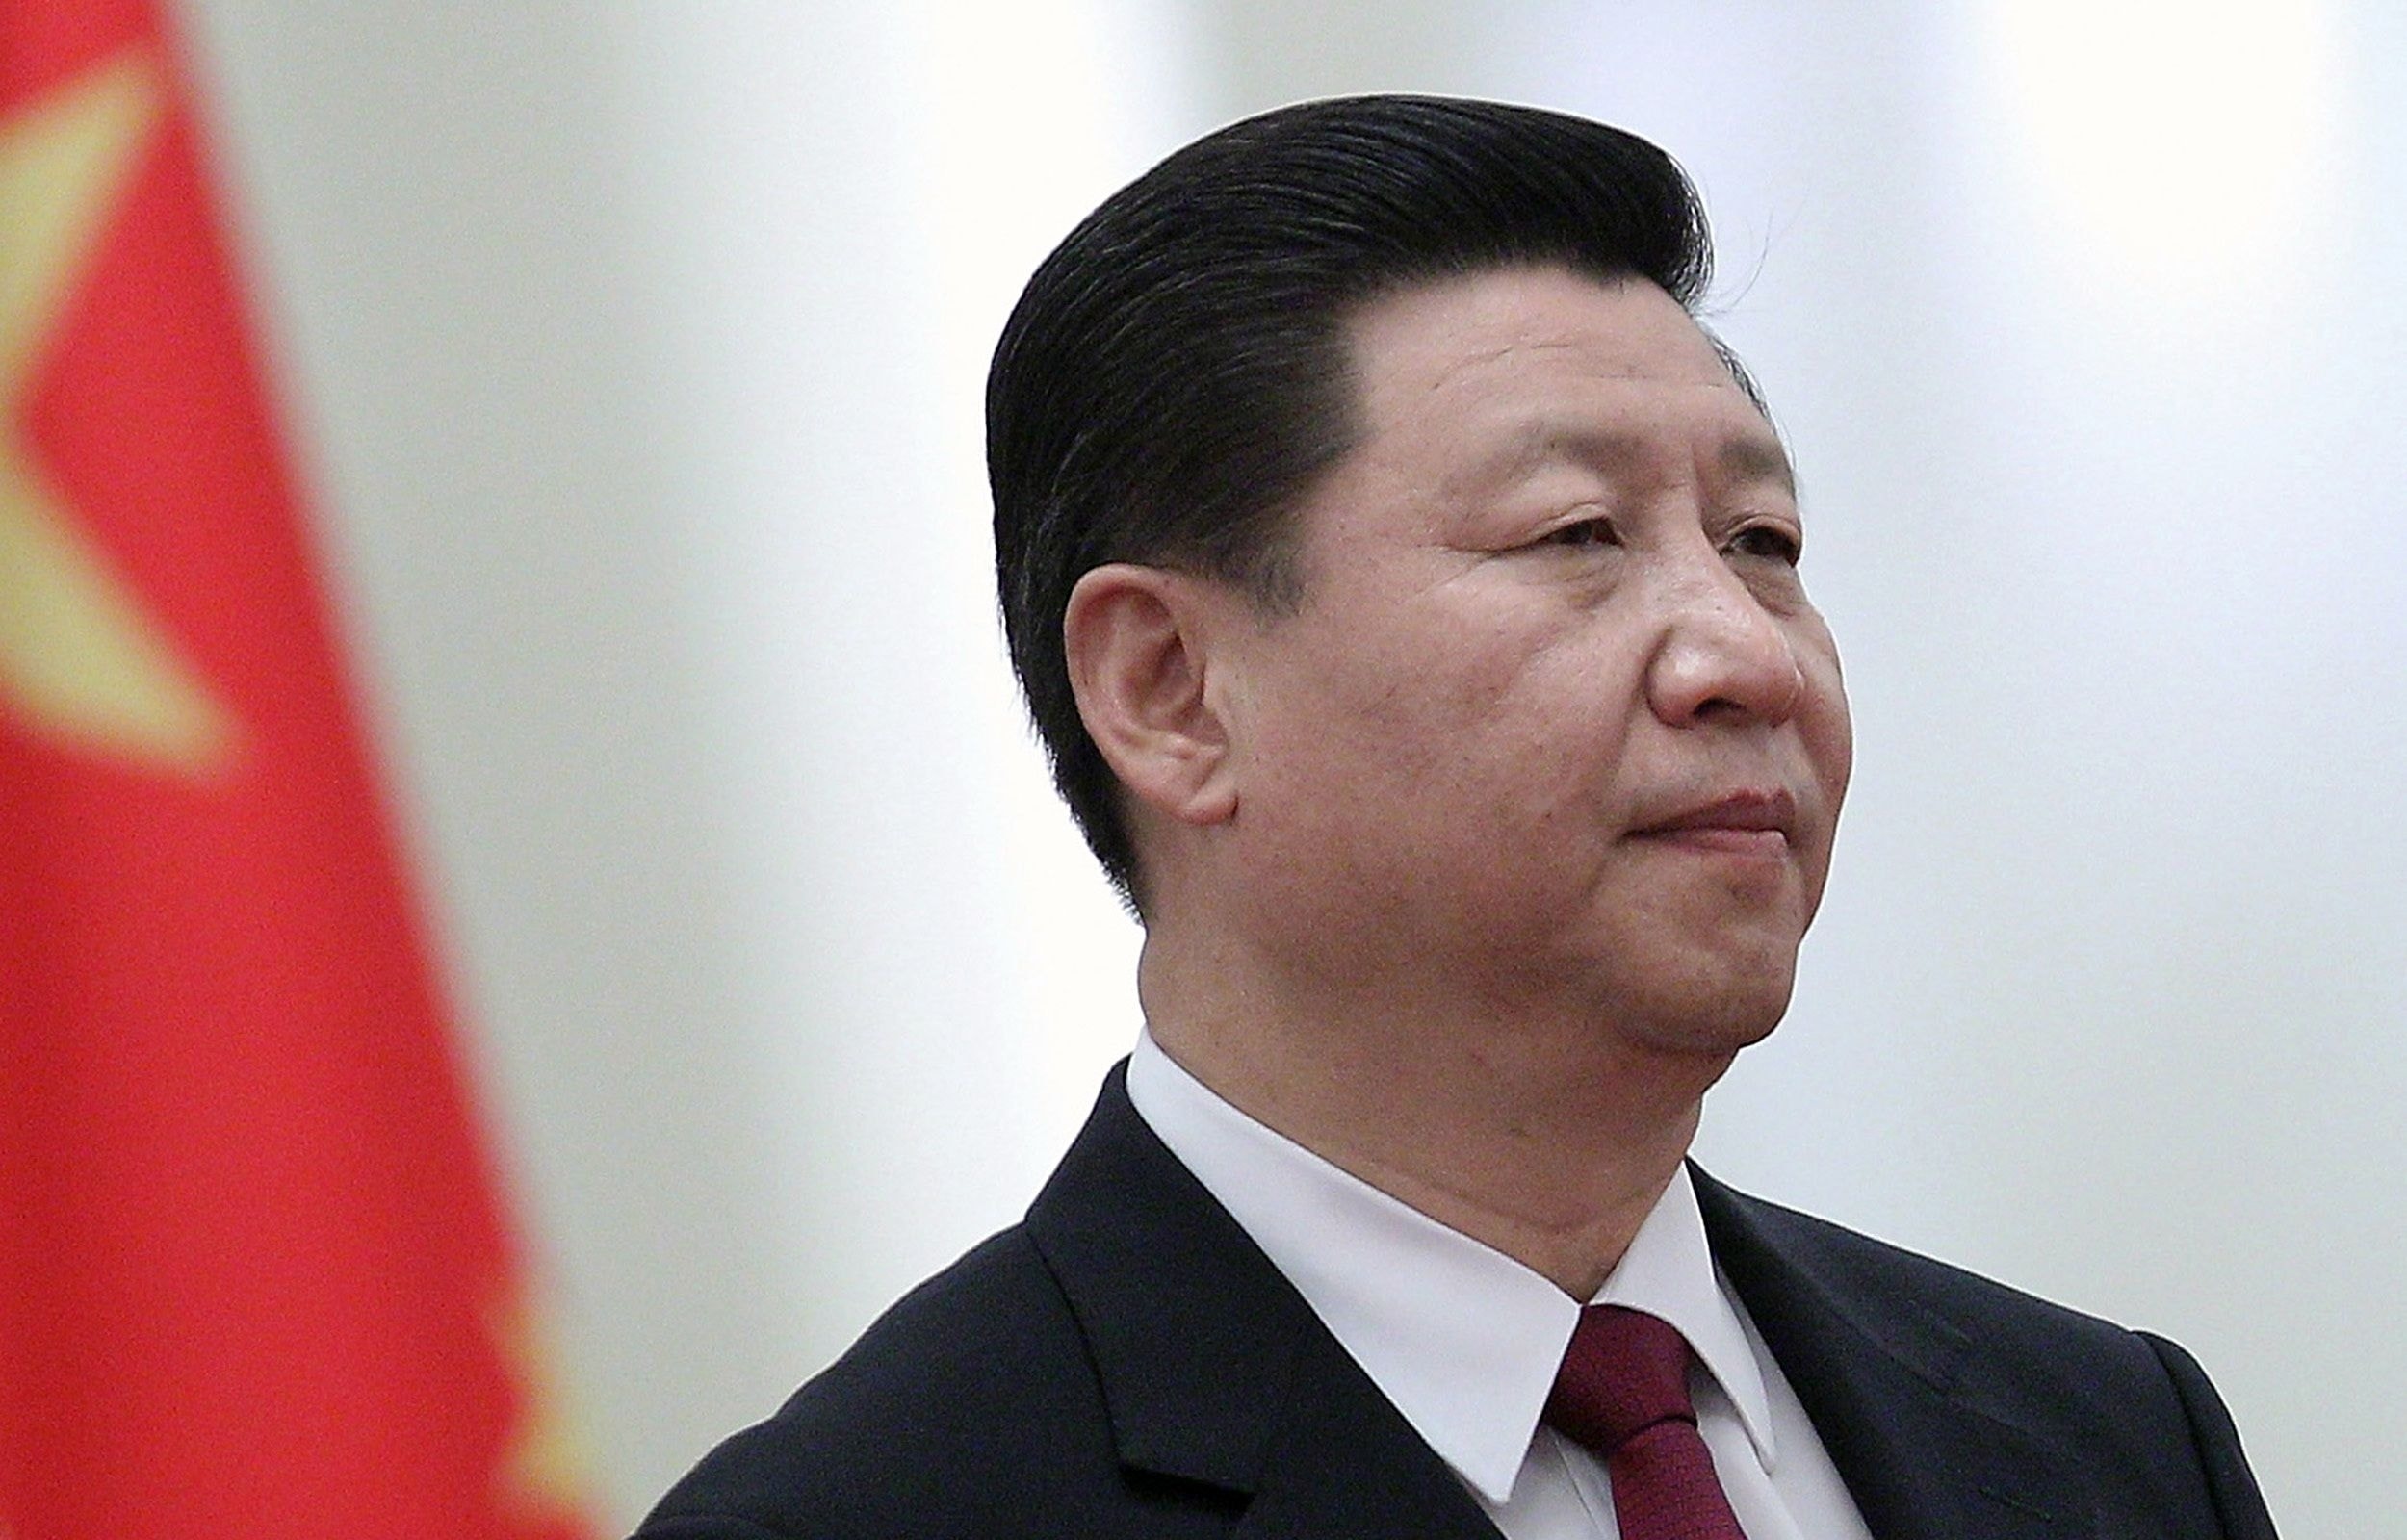 Taiwanese Boy Says He Got Blocked On Chinese TikTok For Calling Xi Jinping A 'Fatty'